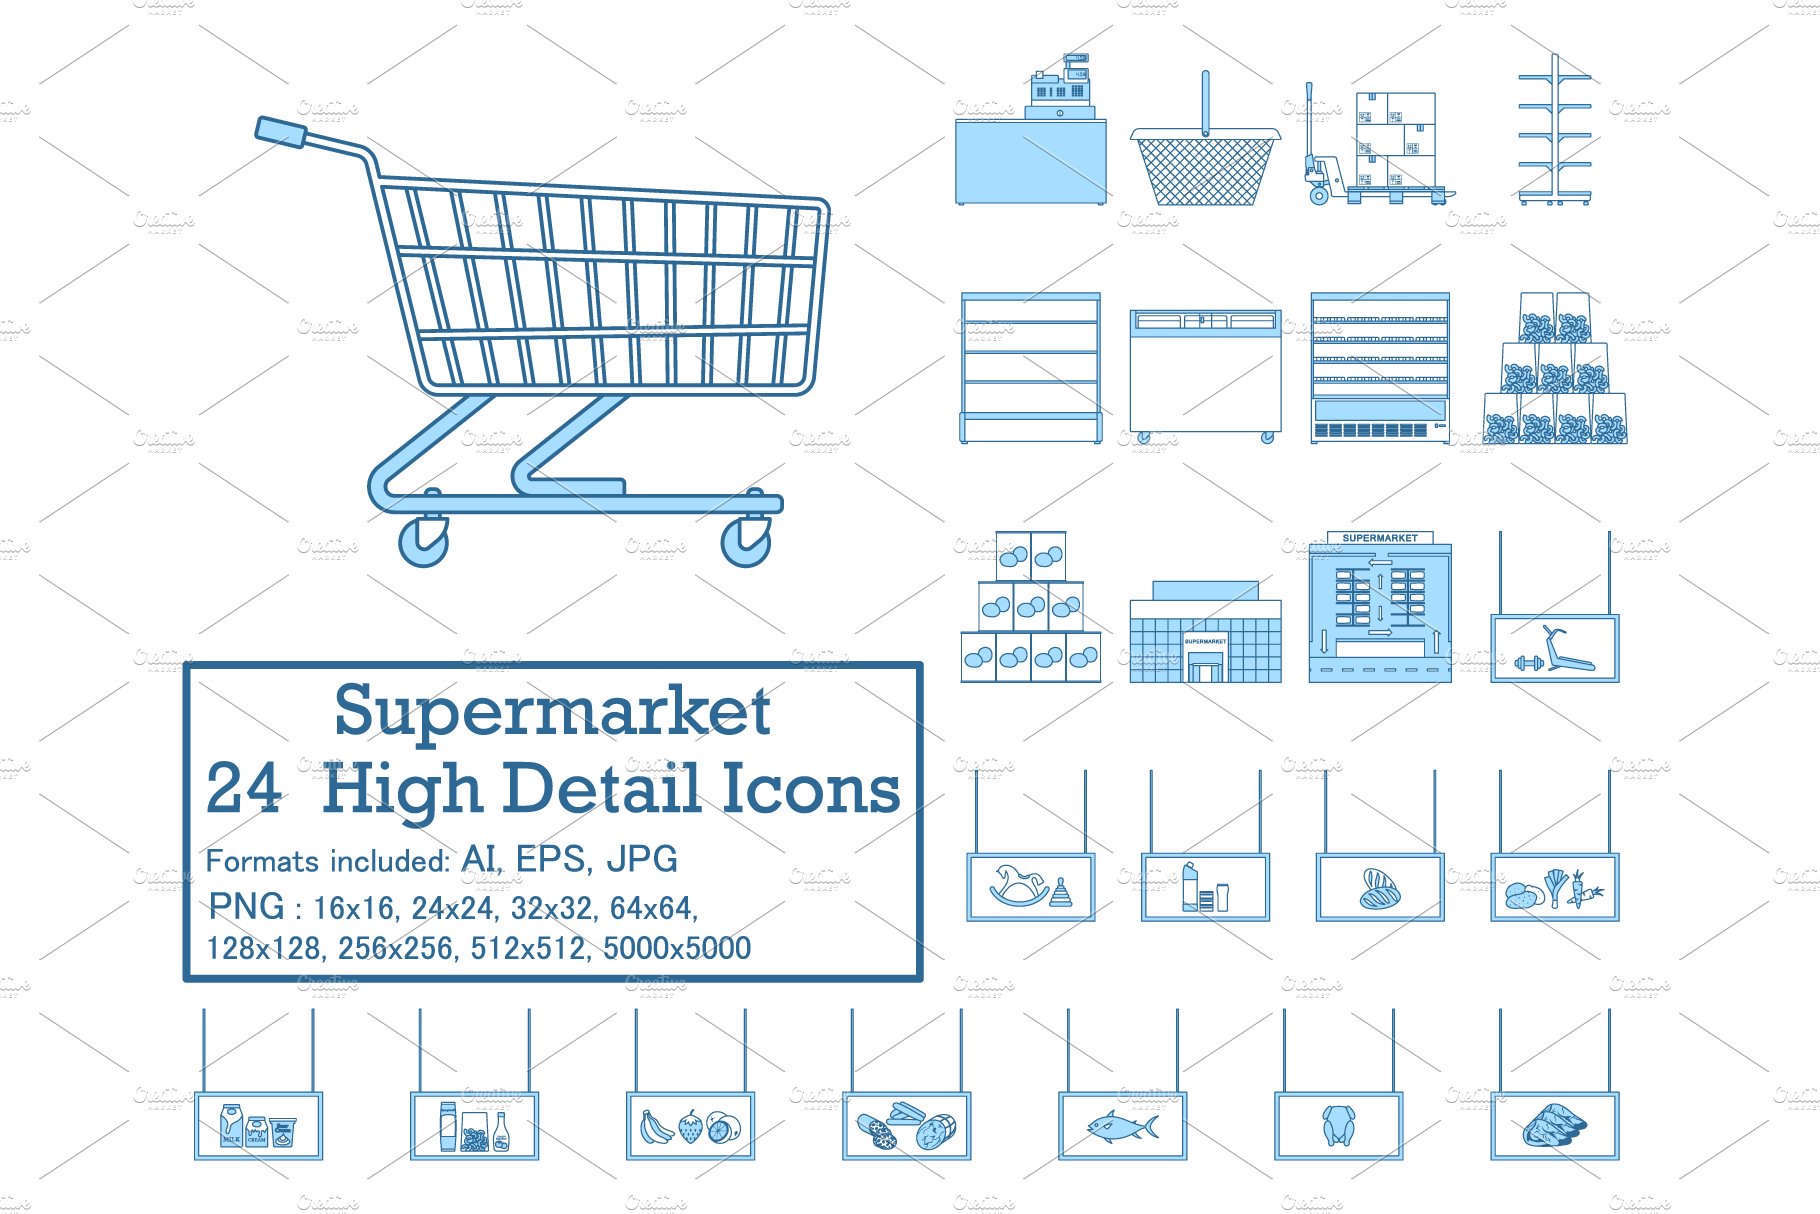 Supermarket Icon Set cover image.